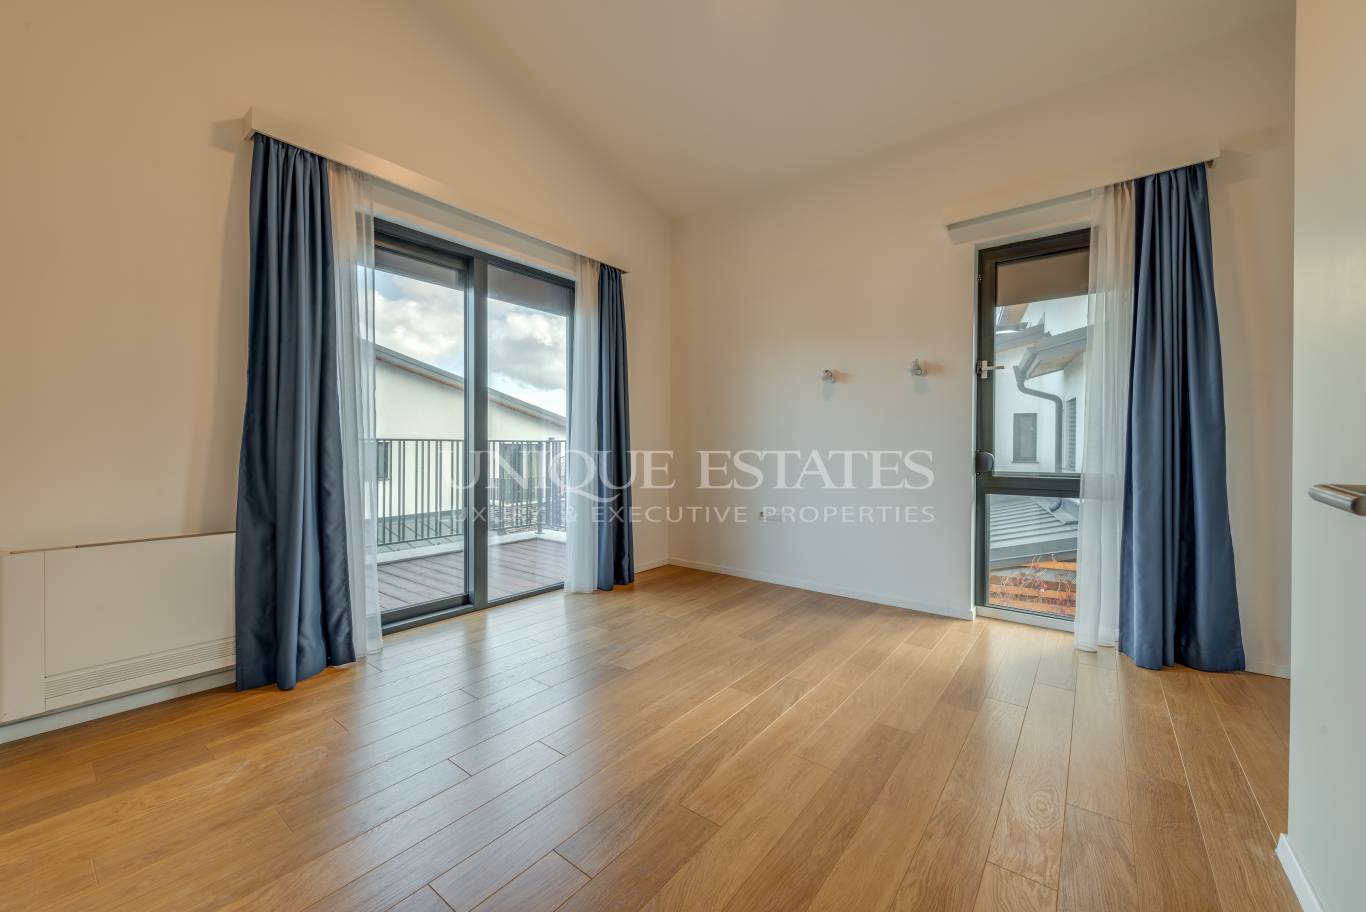 House for rent in Sofia, Malinova dolina va with listing ID: K14506 - image 14